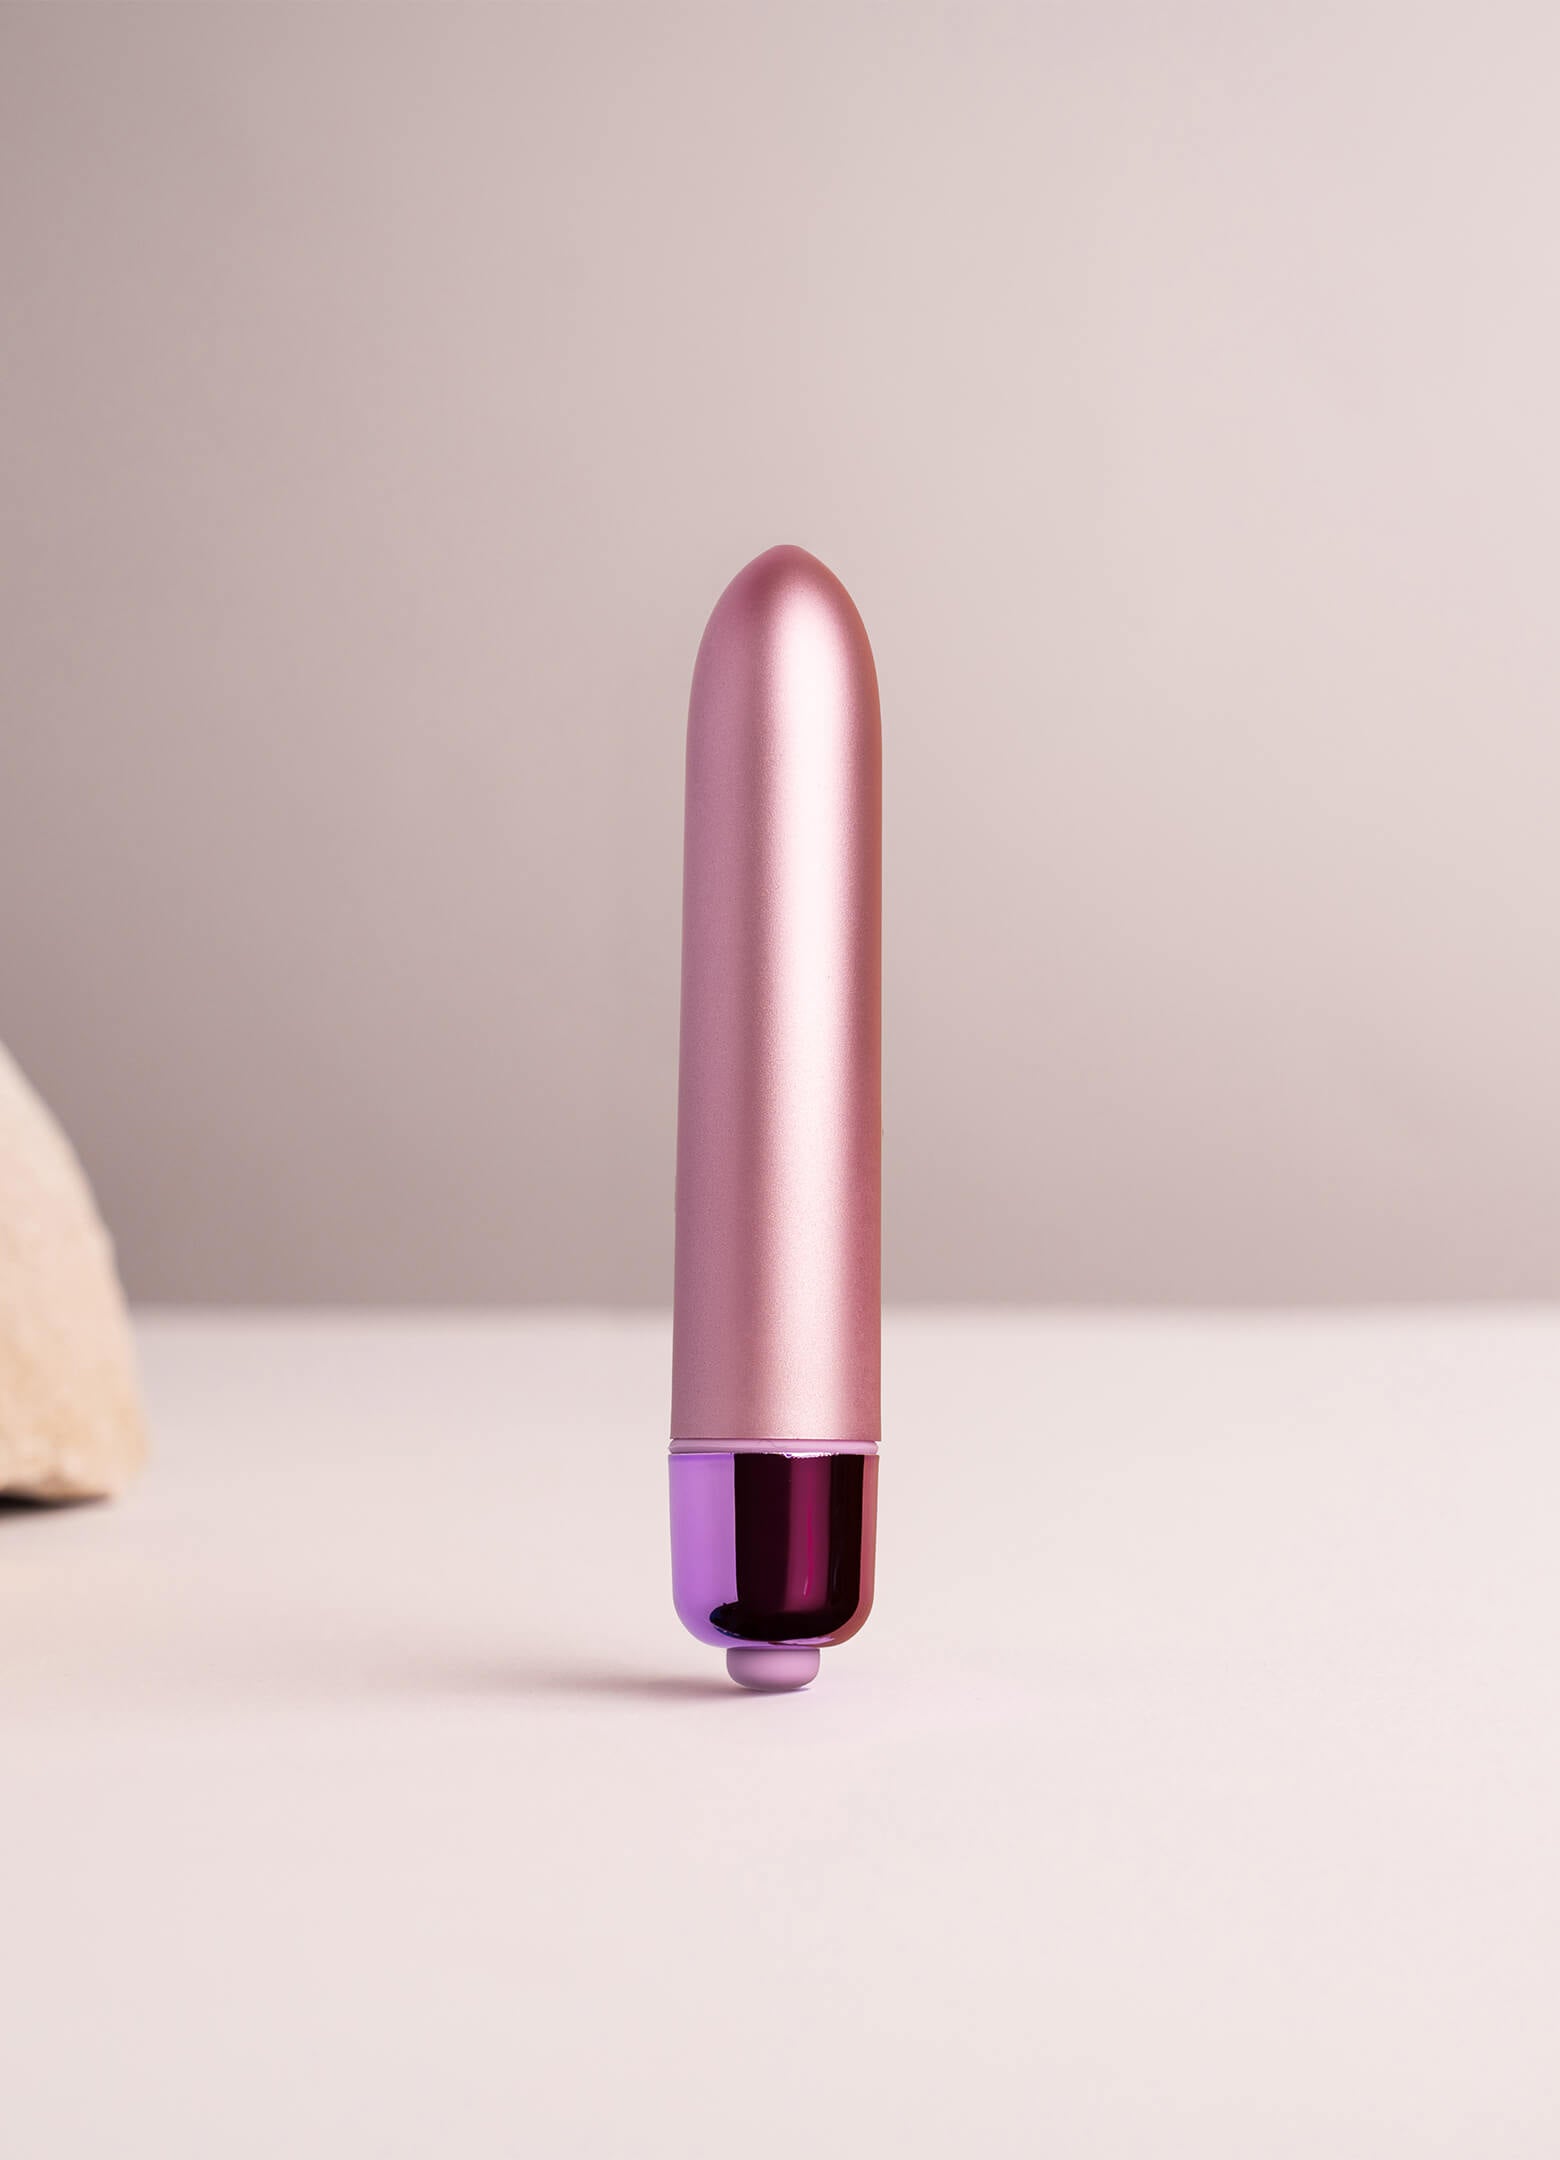 Small bullet vibrator in a matt pink colour.